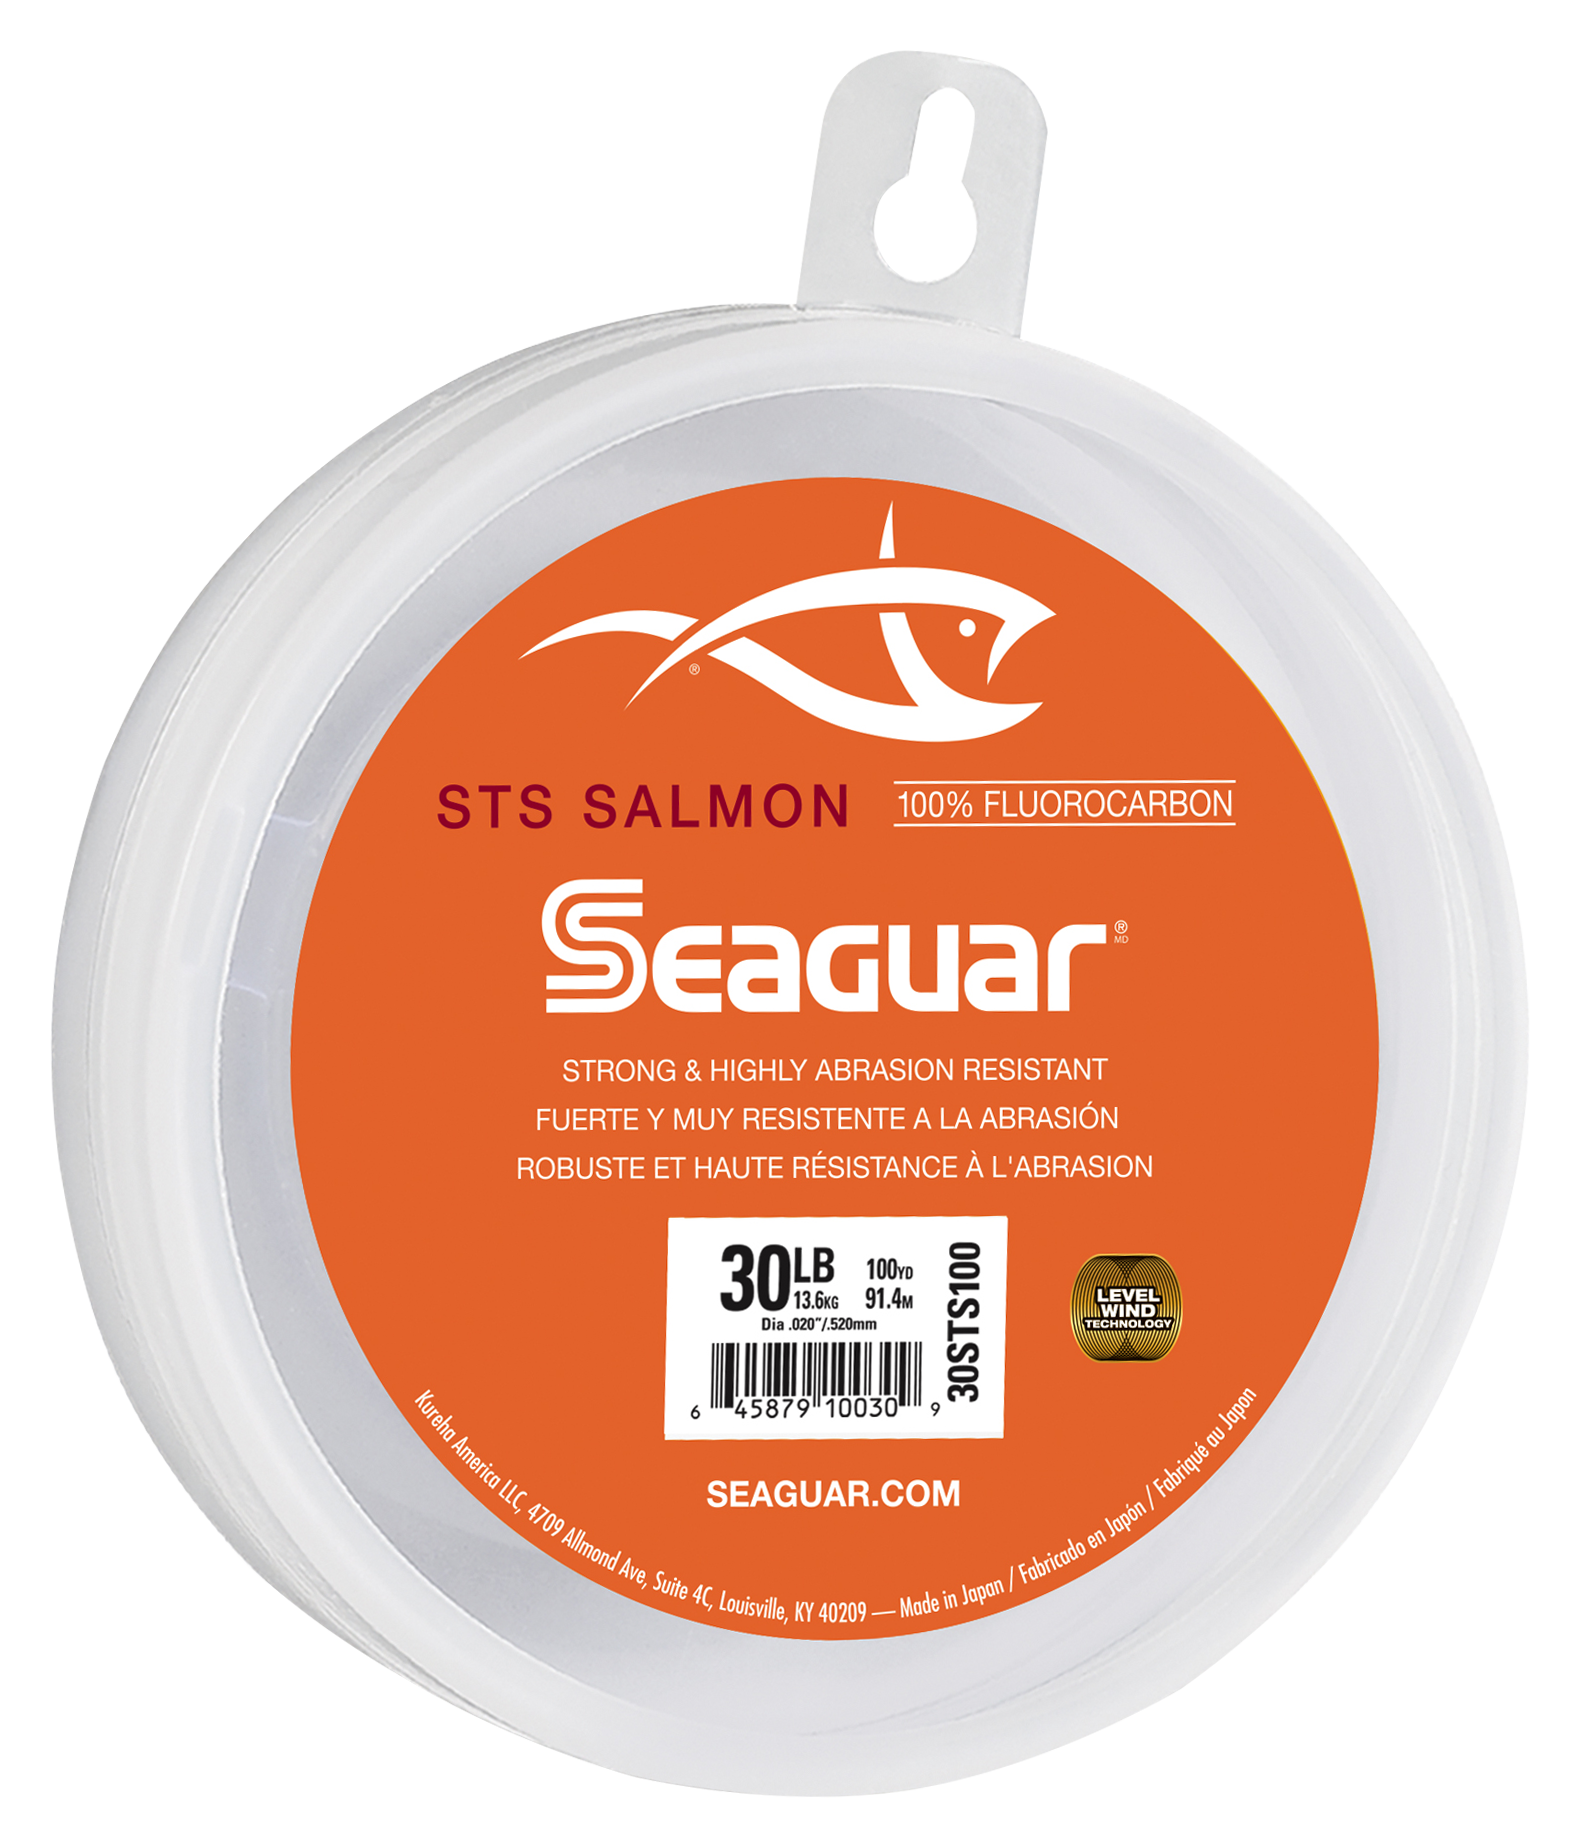 Seaguar STS 25lb Salmon